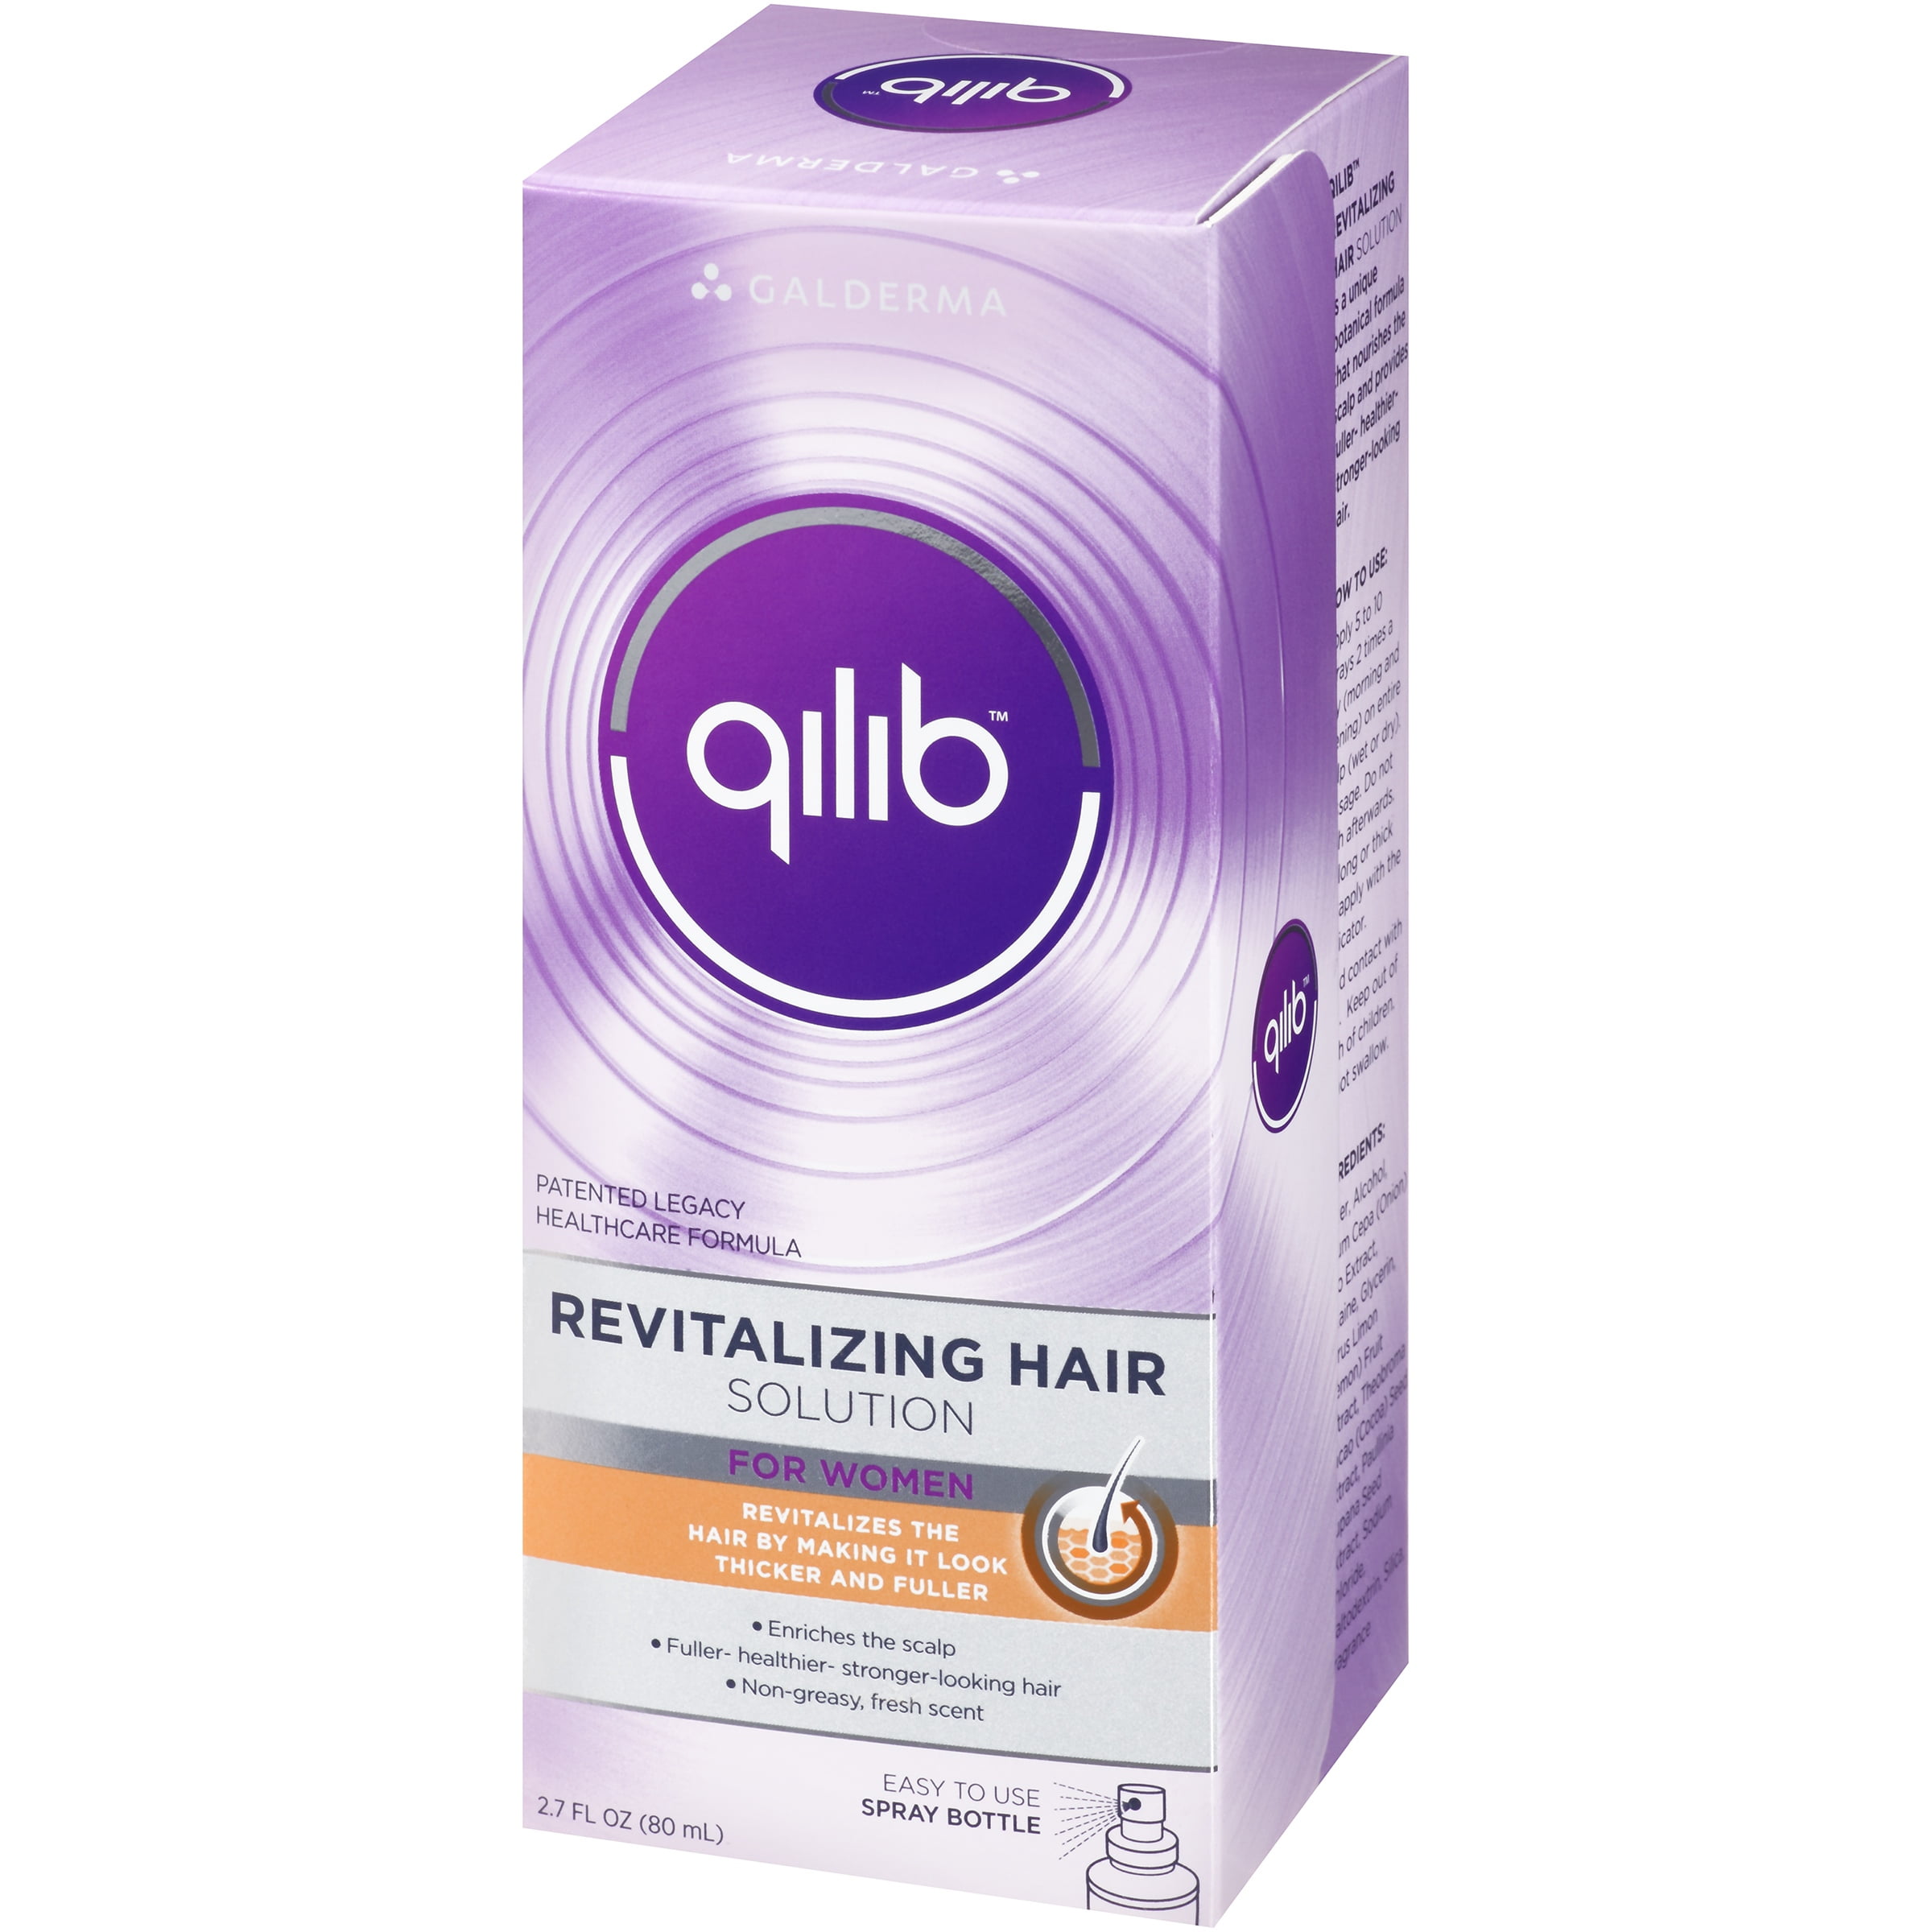 Qilib Revitalizing Hair Solution for Women,  Oz 